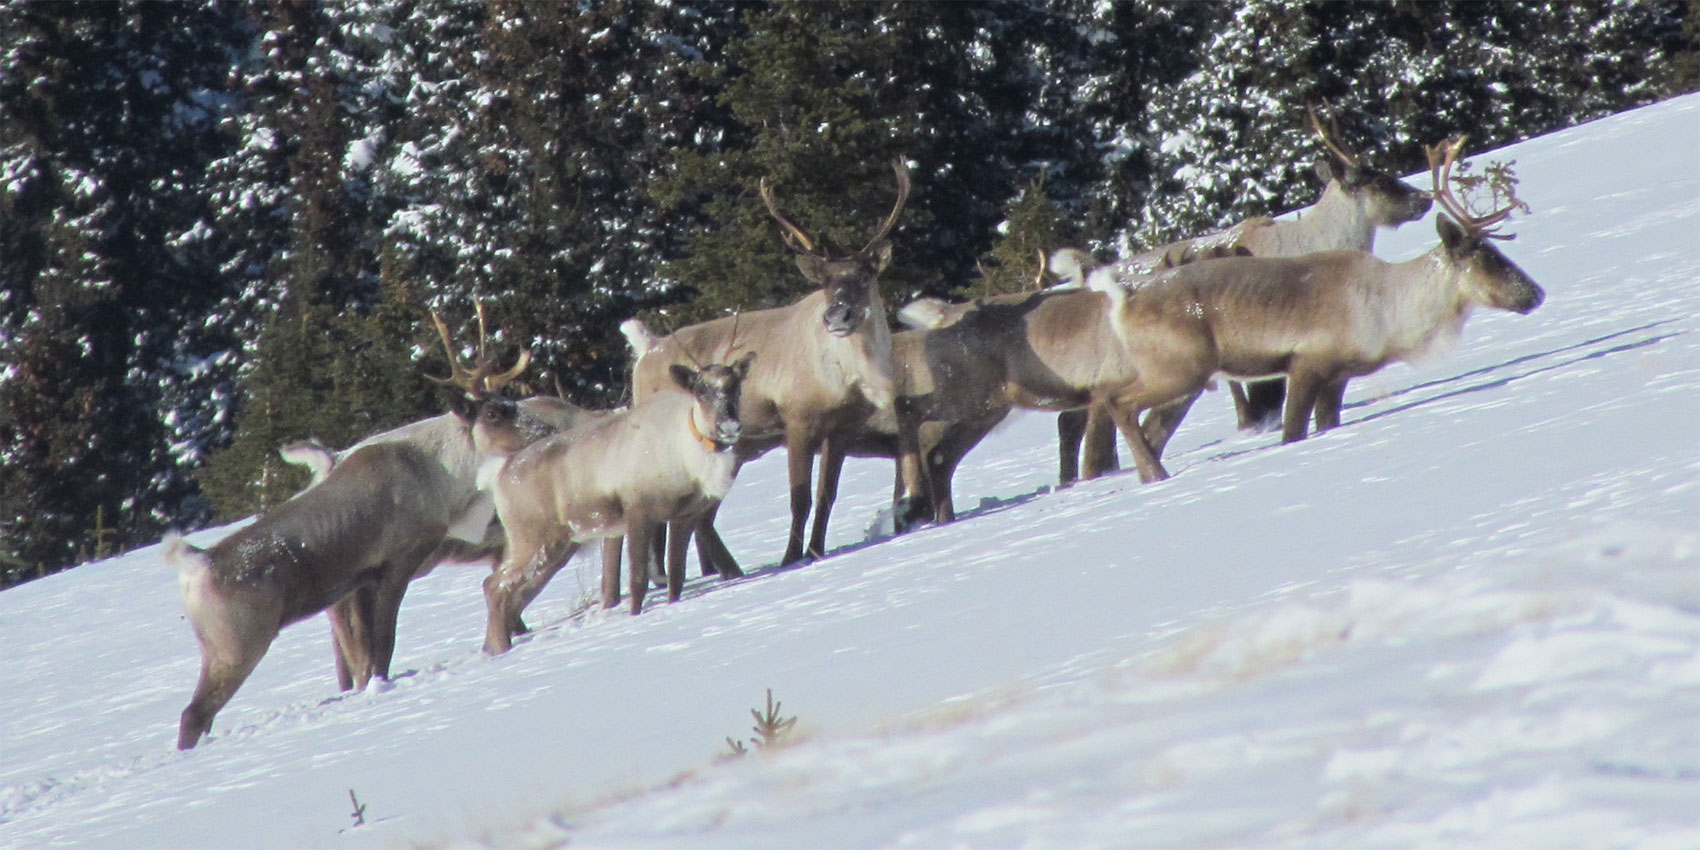 group caribou walking up a snowy hillside photo by doug macnearney